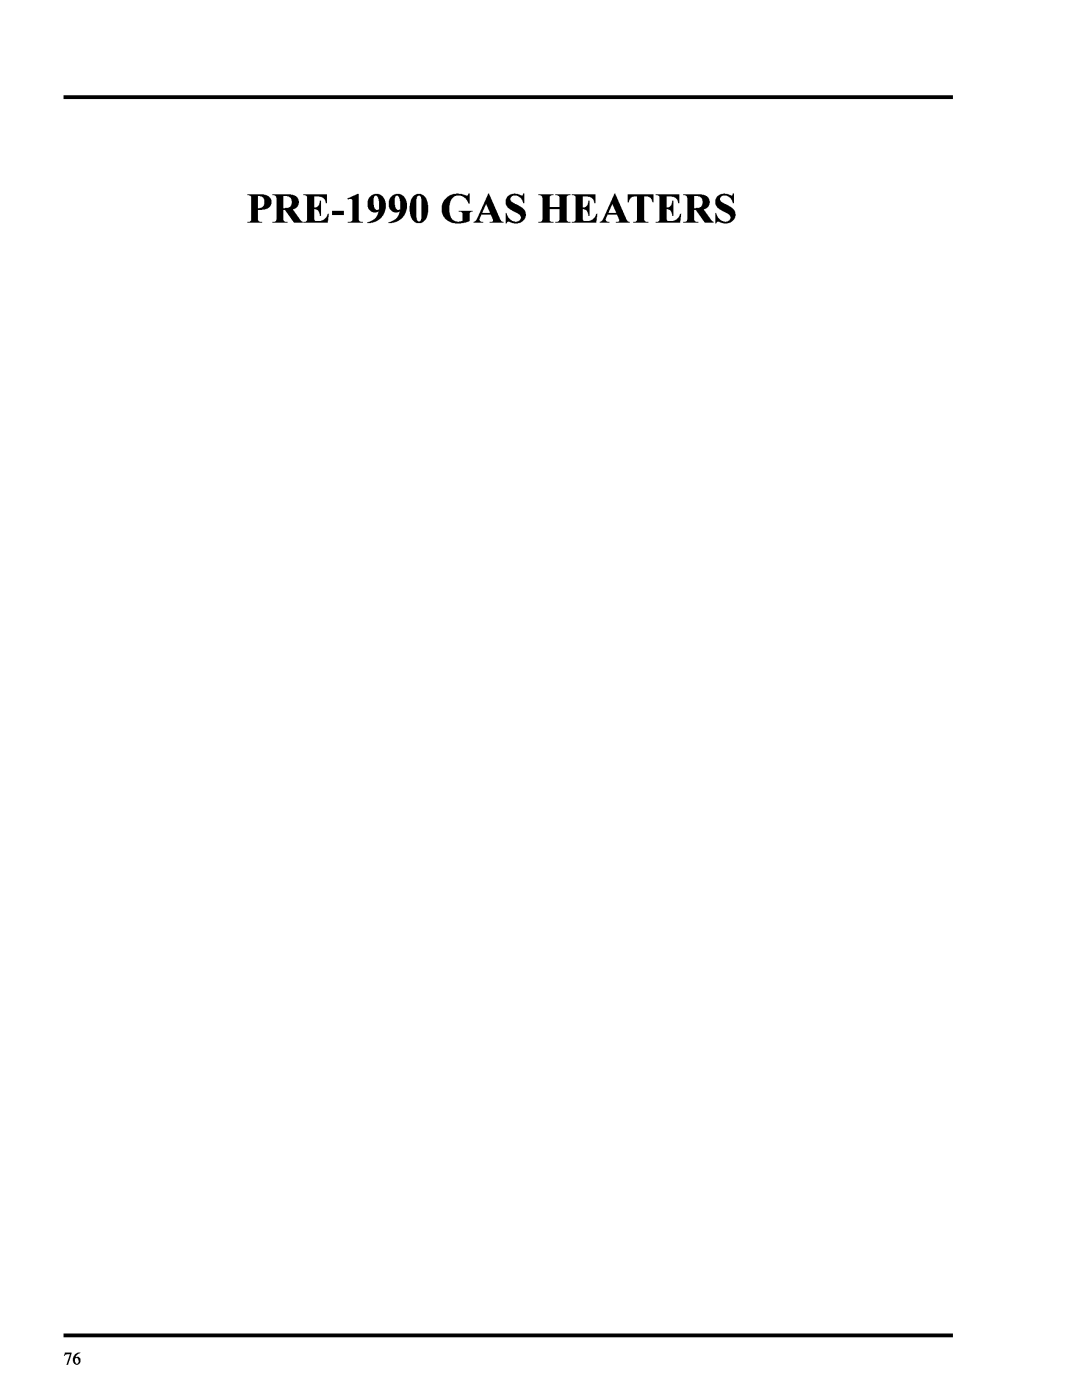 GSI Outdoors PNEG-377 service manual PRE-1990GAS HEATERS 